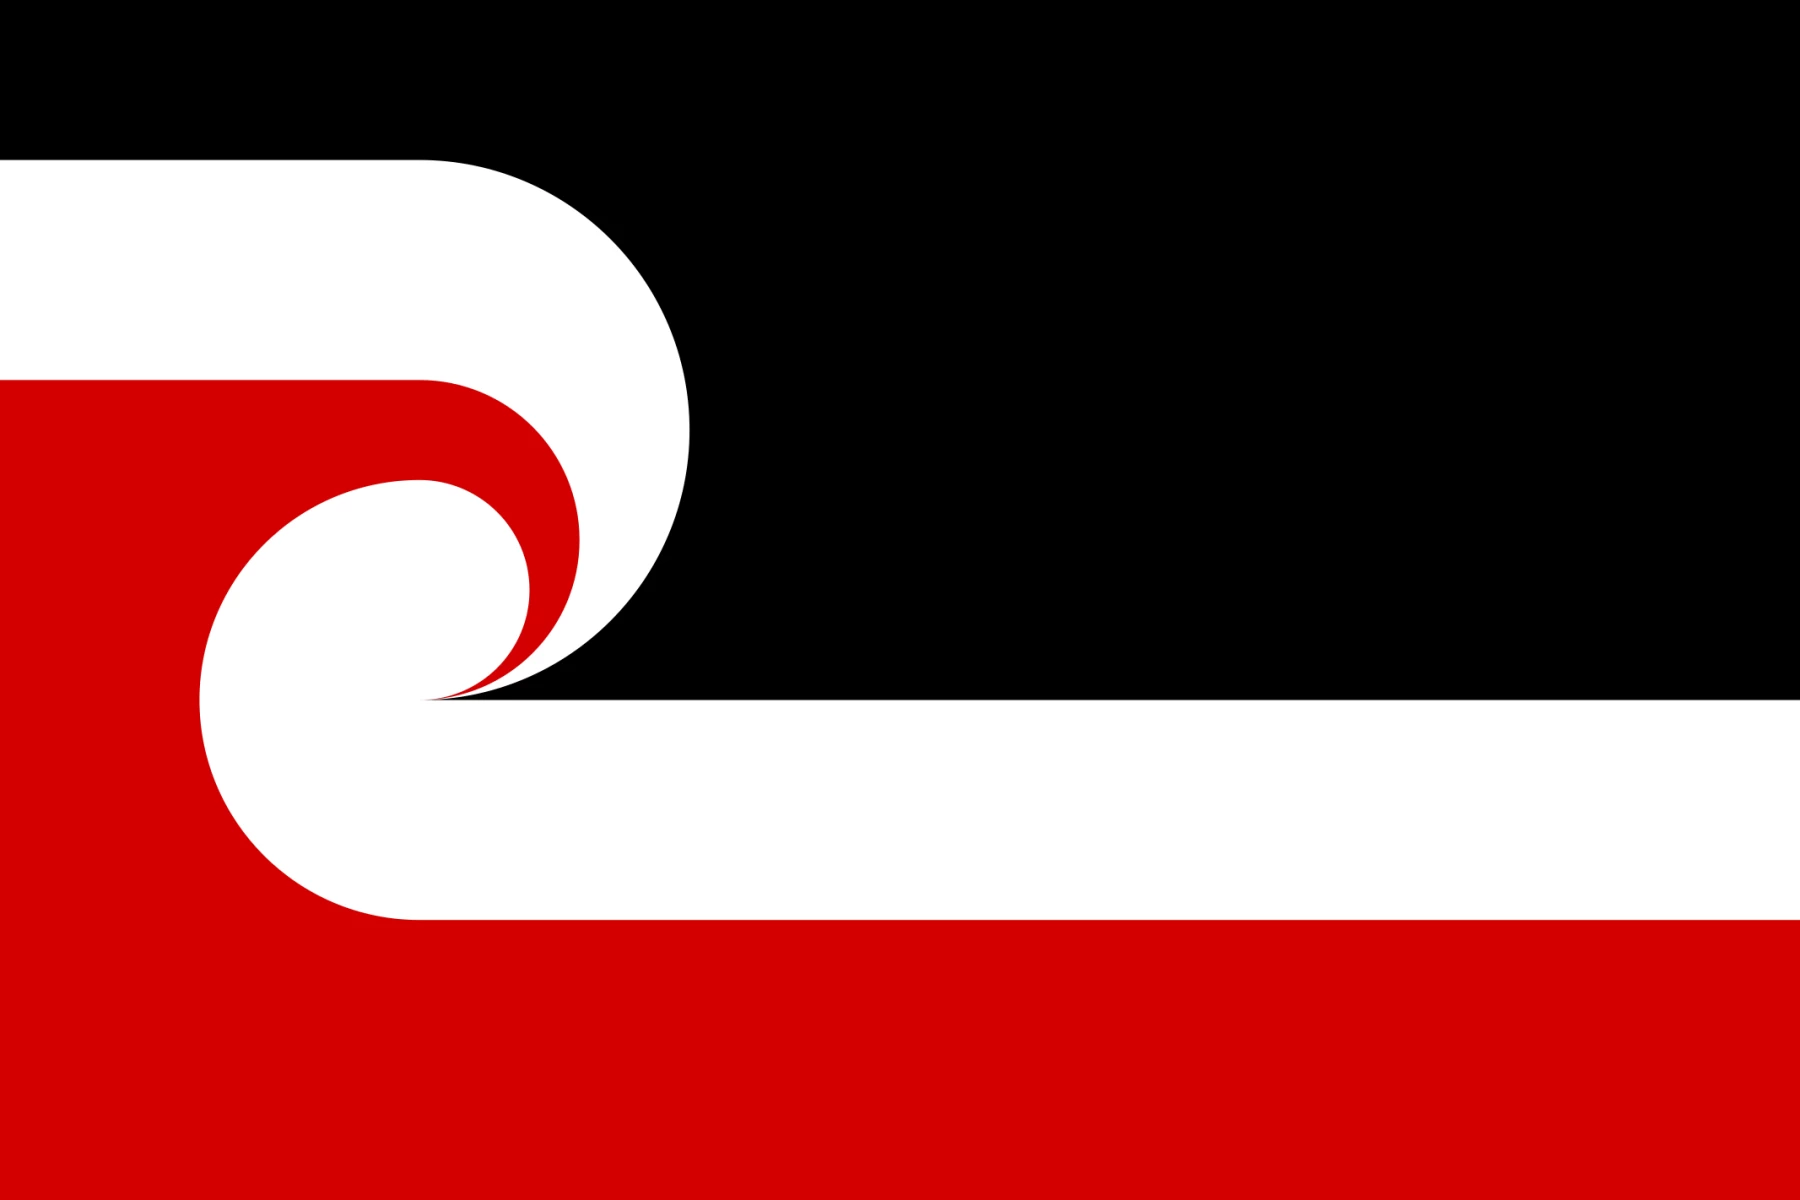 The National Māori flag